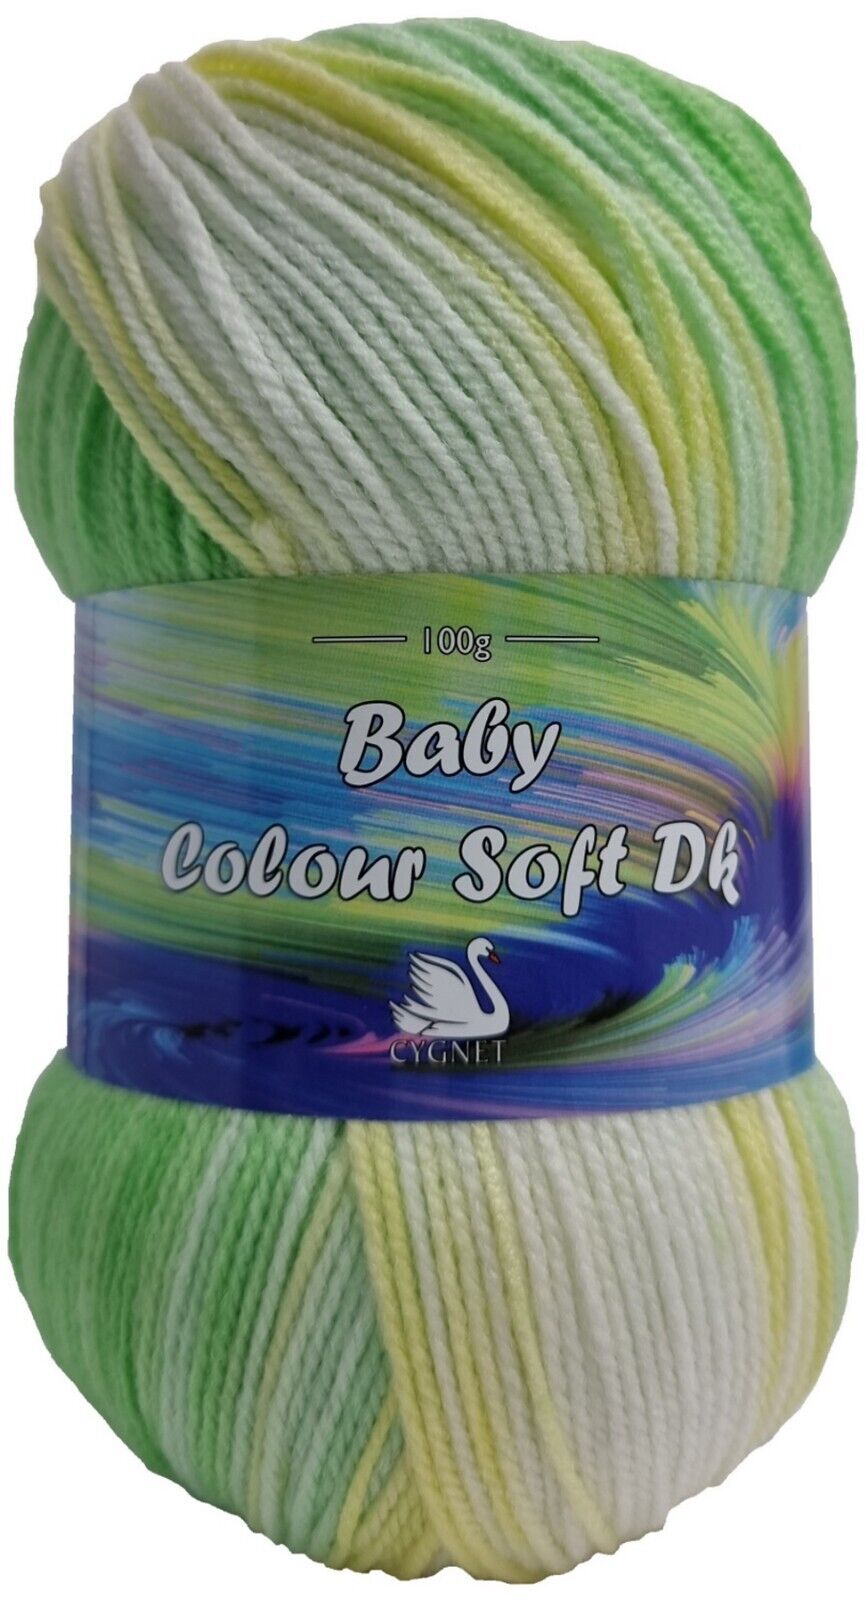 Cygnet BABY COLOUR SOFT DK Knitting Yarn / Wool - 100g - Whirly Pop